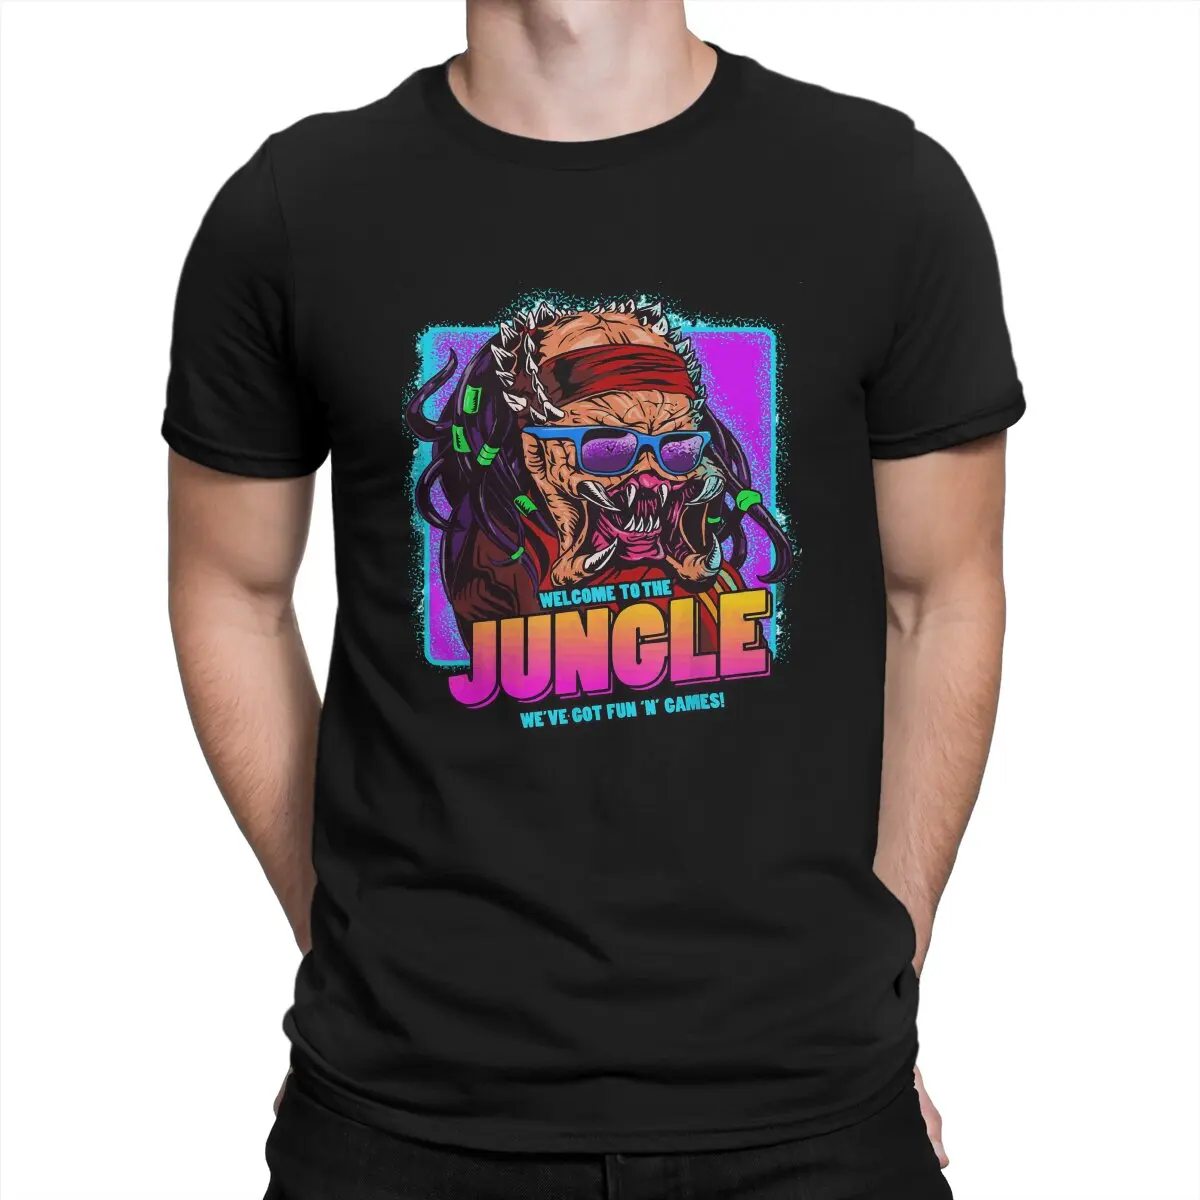 

Welcome to the Jungle T Shirt for Men Cotton Fun T-Shirt Round Collar Aliens VS Predator Game Tee Shirt Short Sleeve Tops Summer